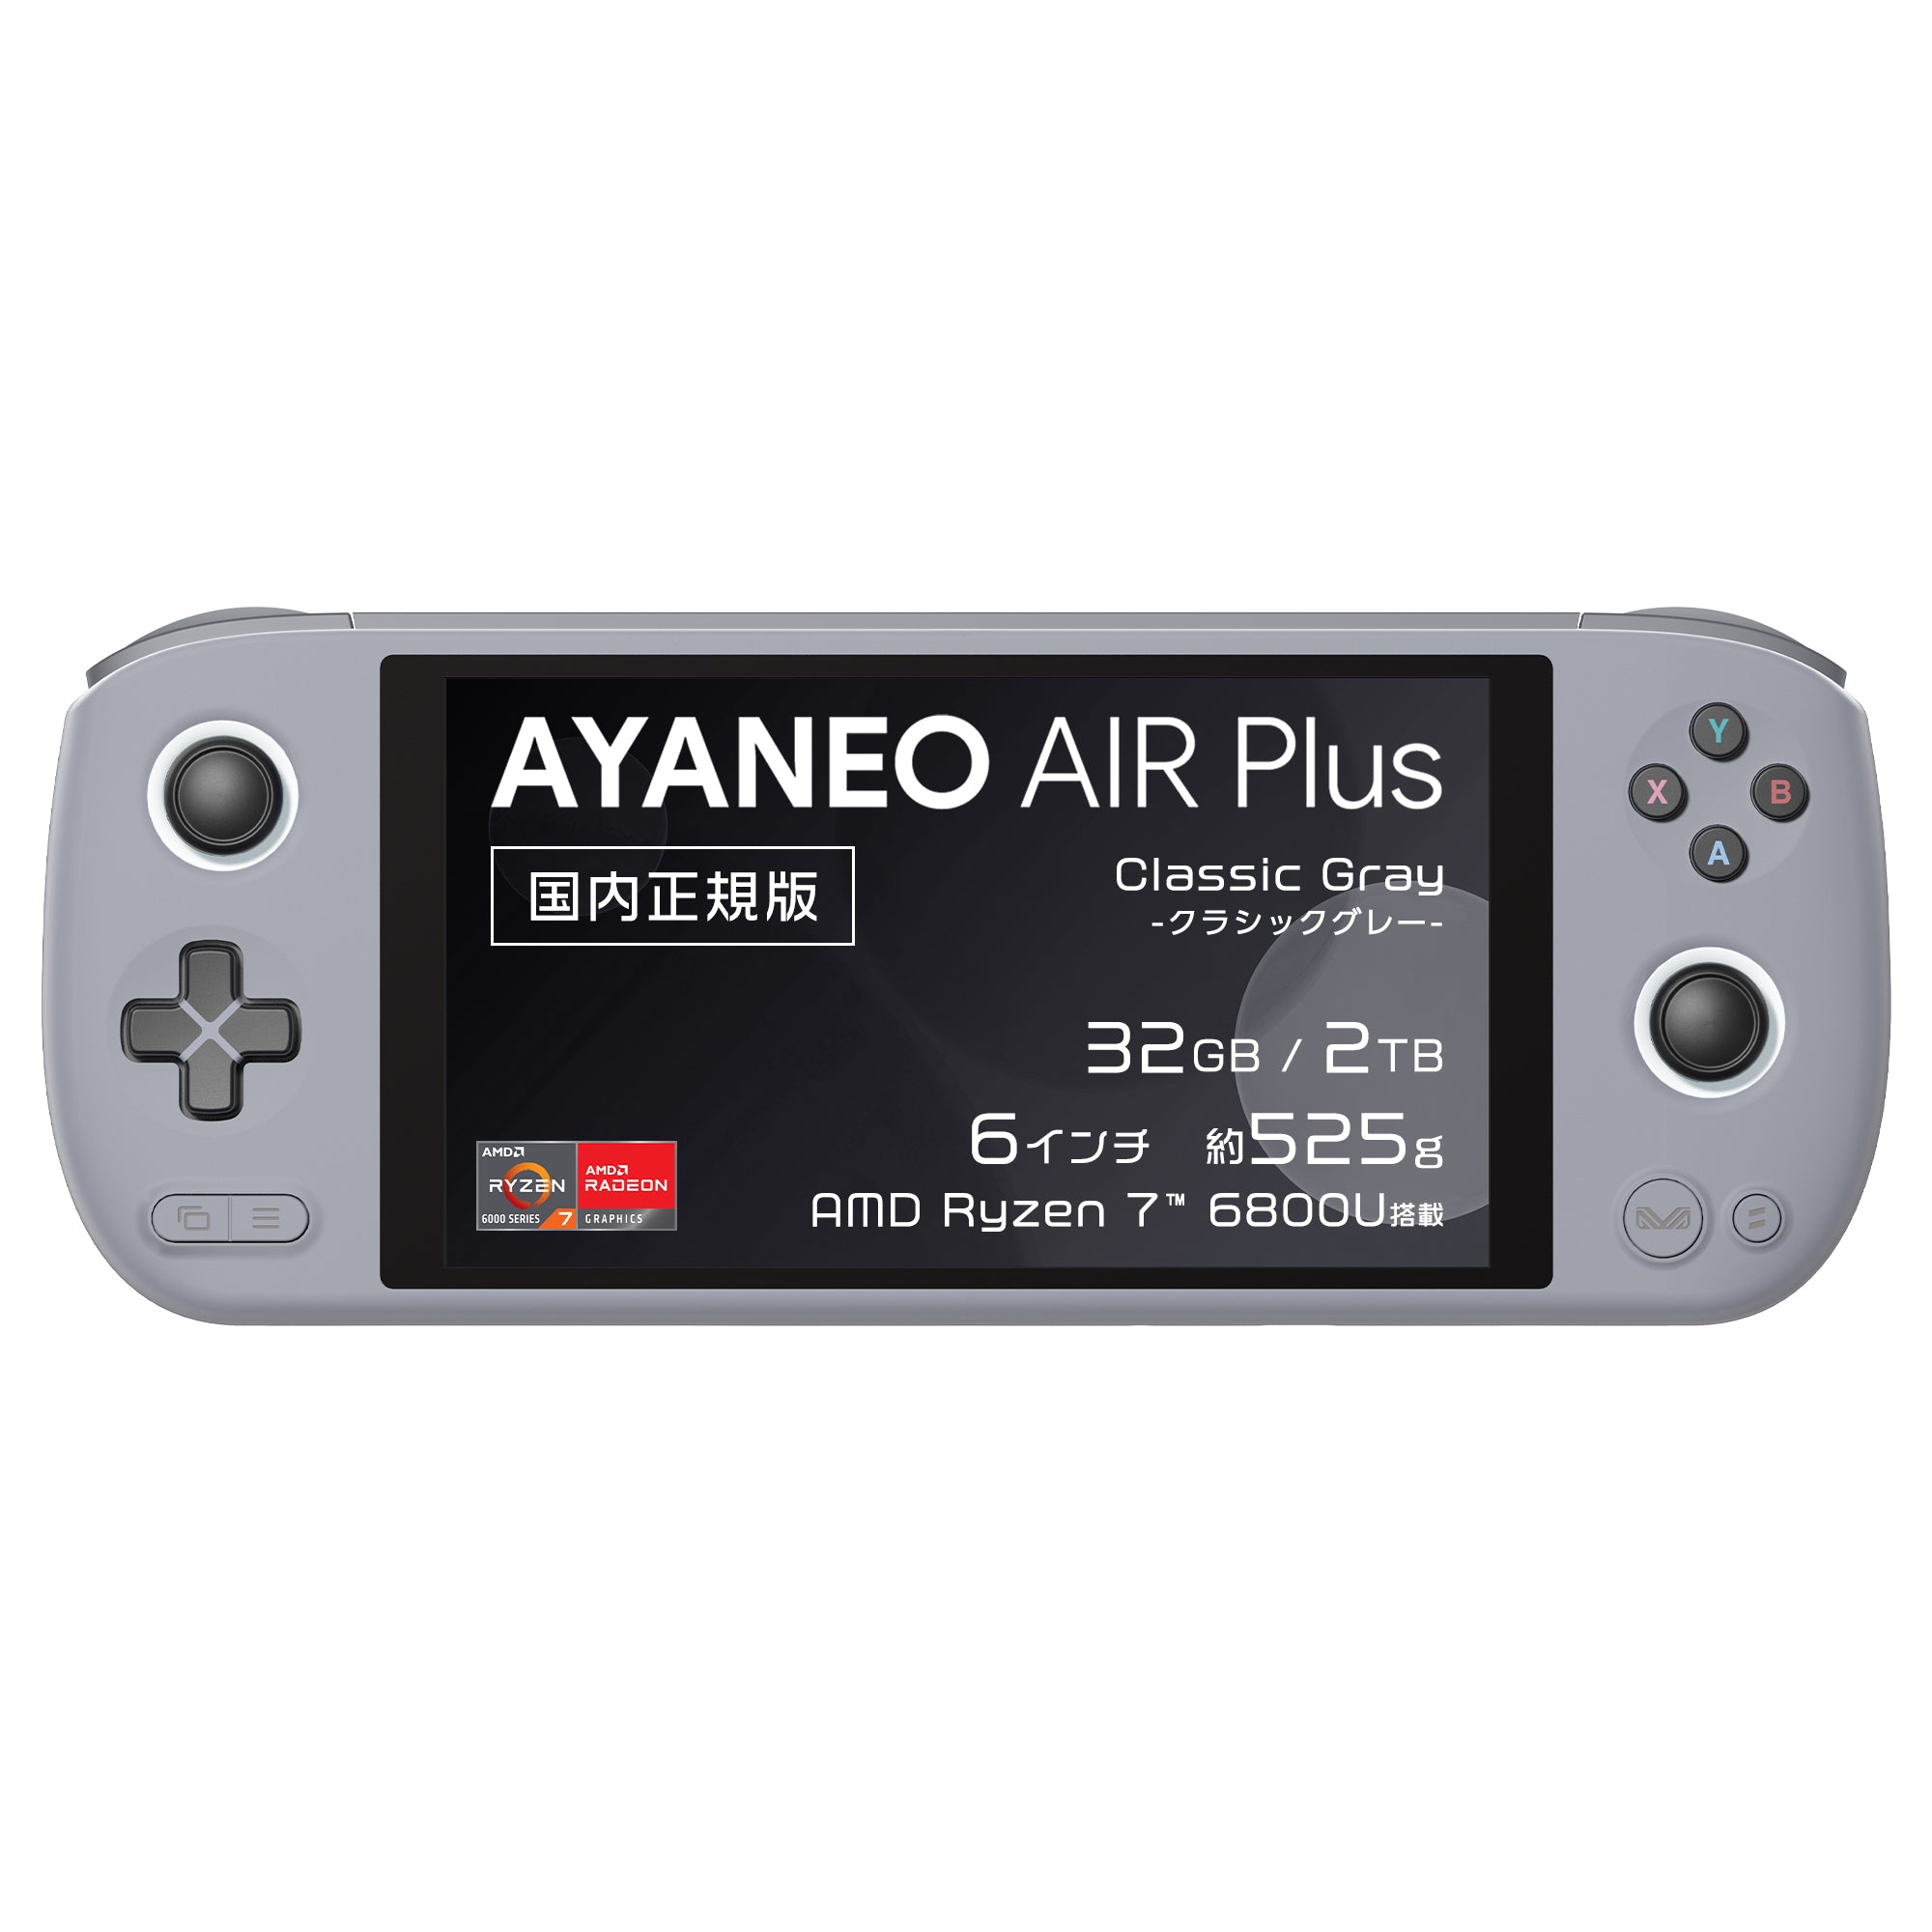 AYANEO AIR Plus Ryzen 6800U 32GB/2TB スターライトブラック